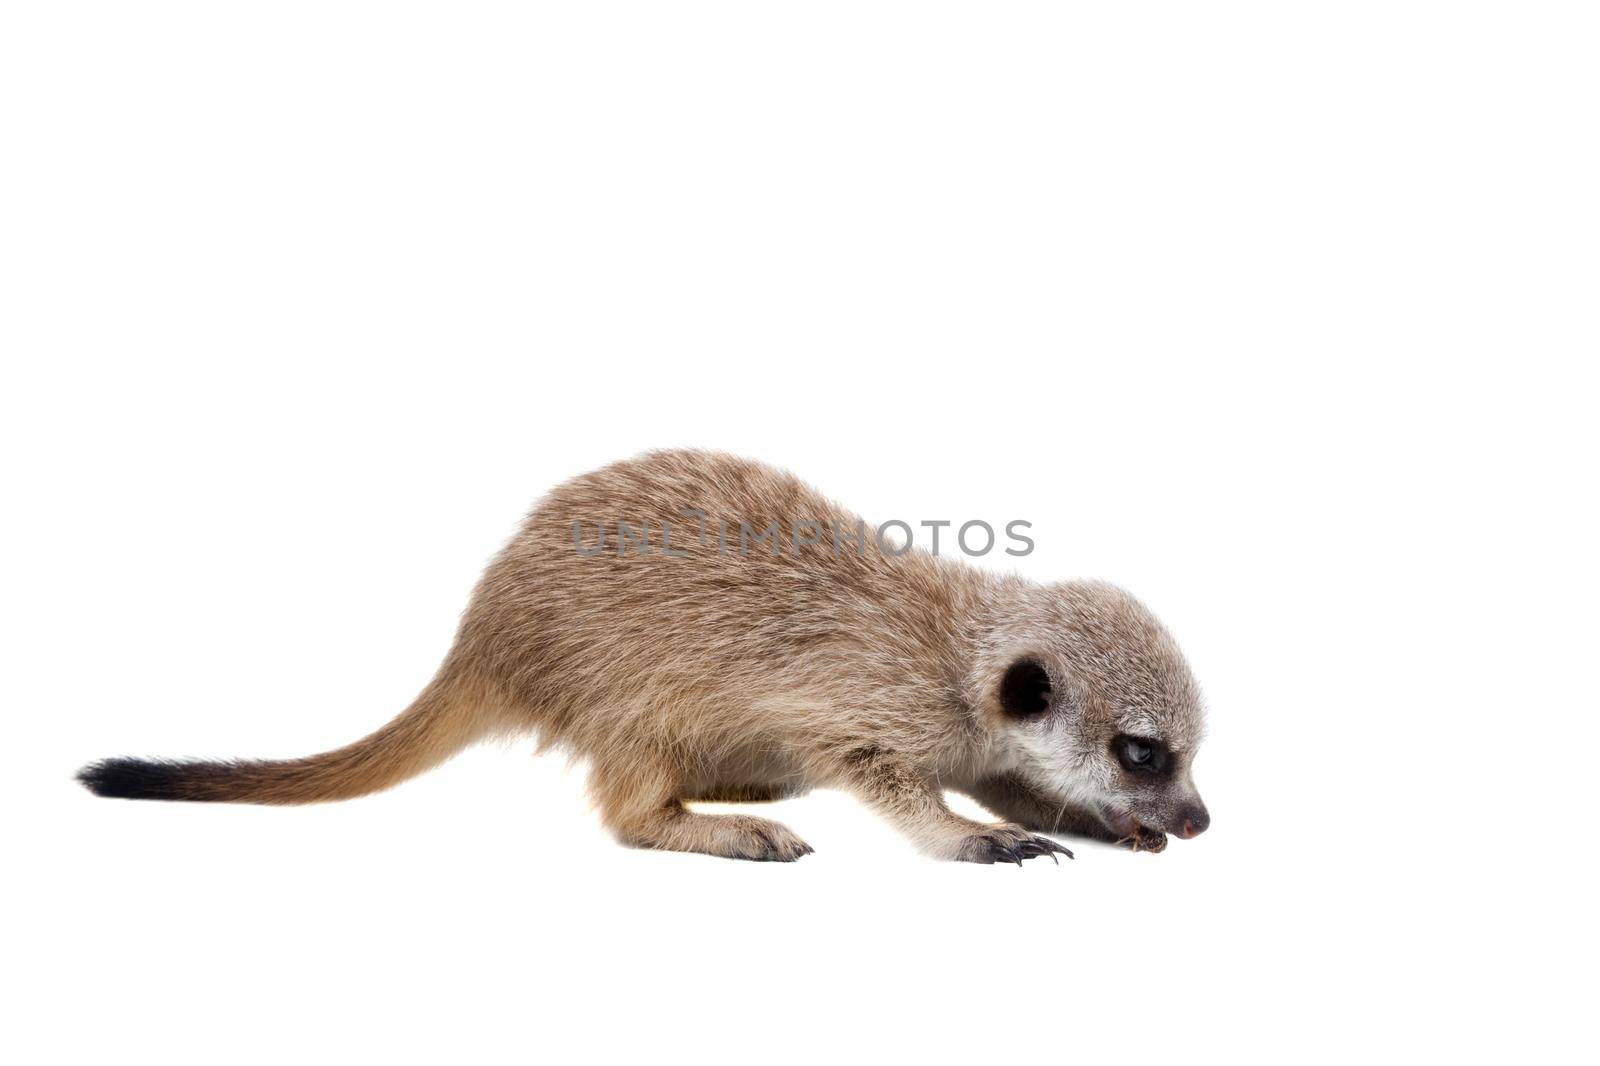 The meerkat or suricate cub, Suricata suricatta, isolated on white